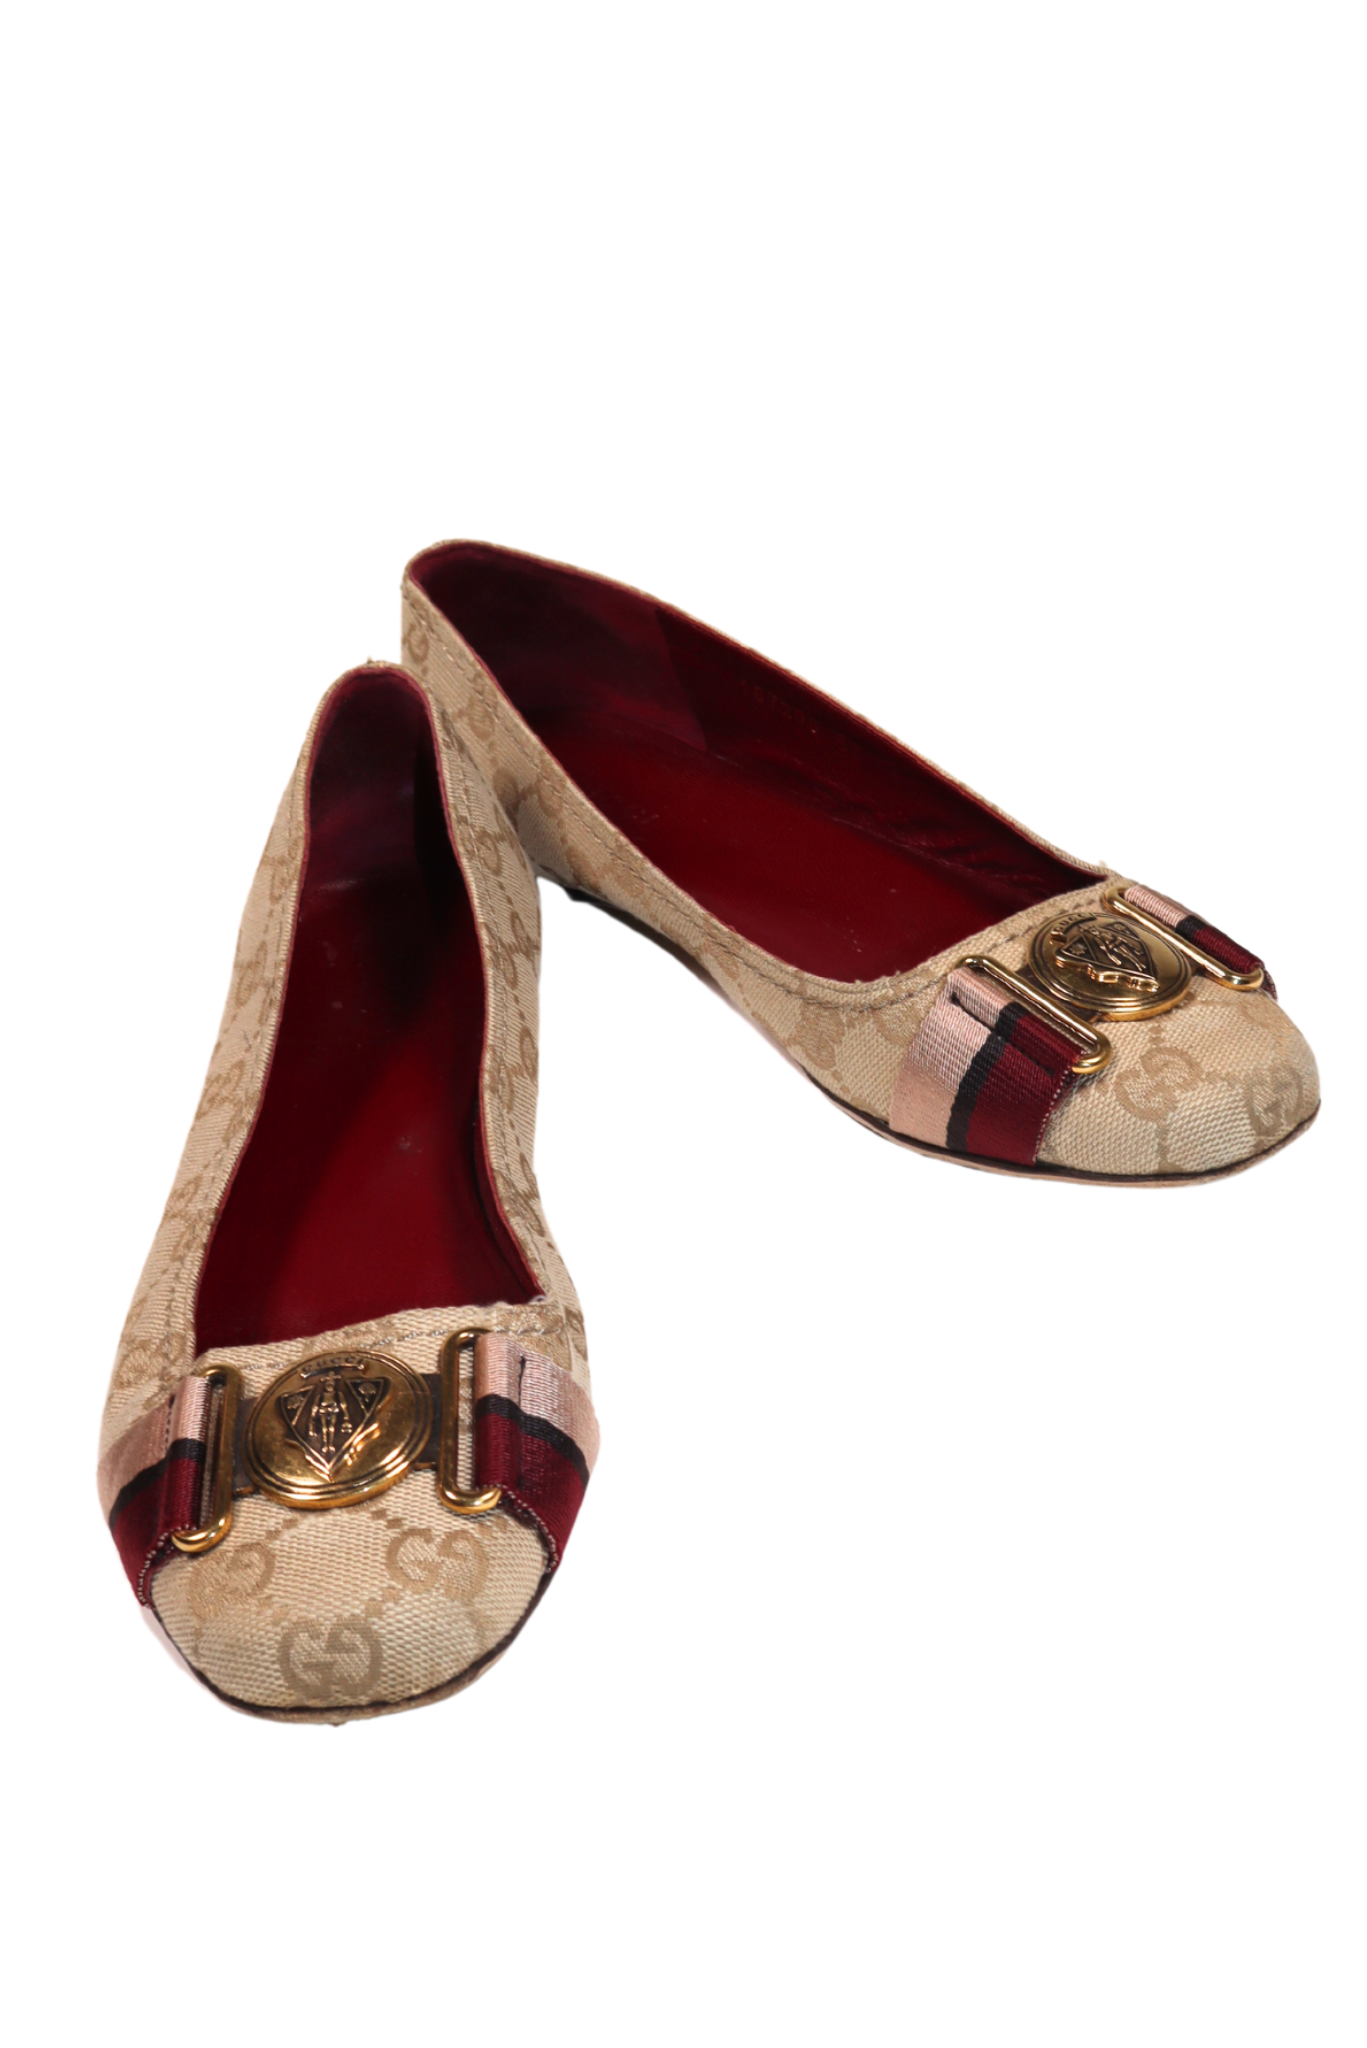 Vintage Gucci Monogram Ballet Flat Shoe